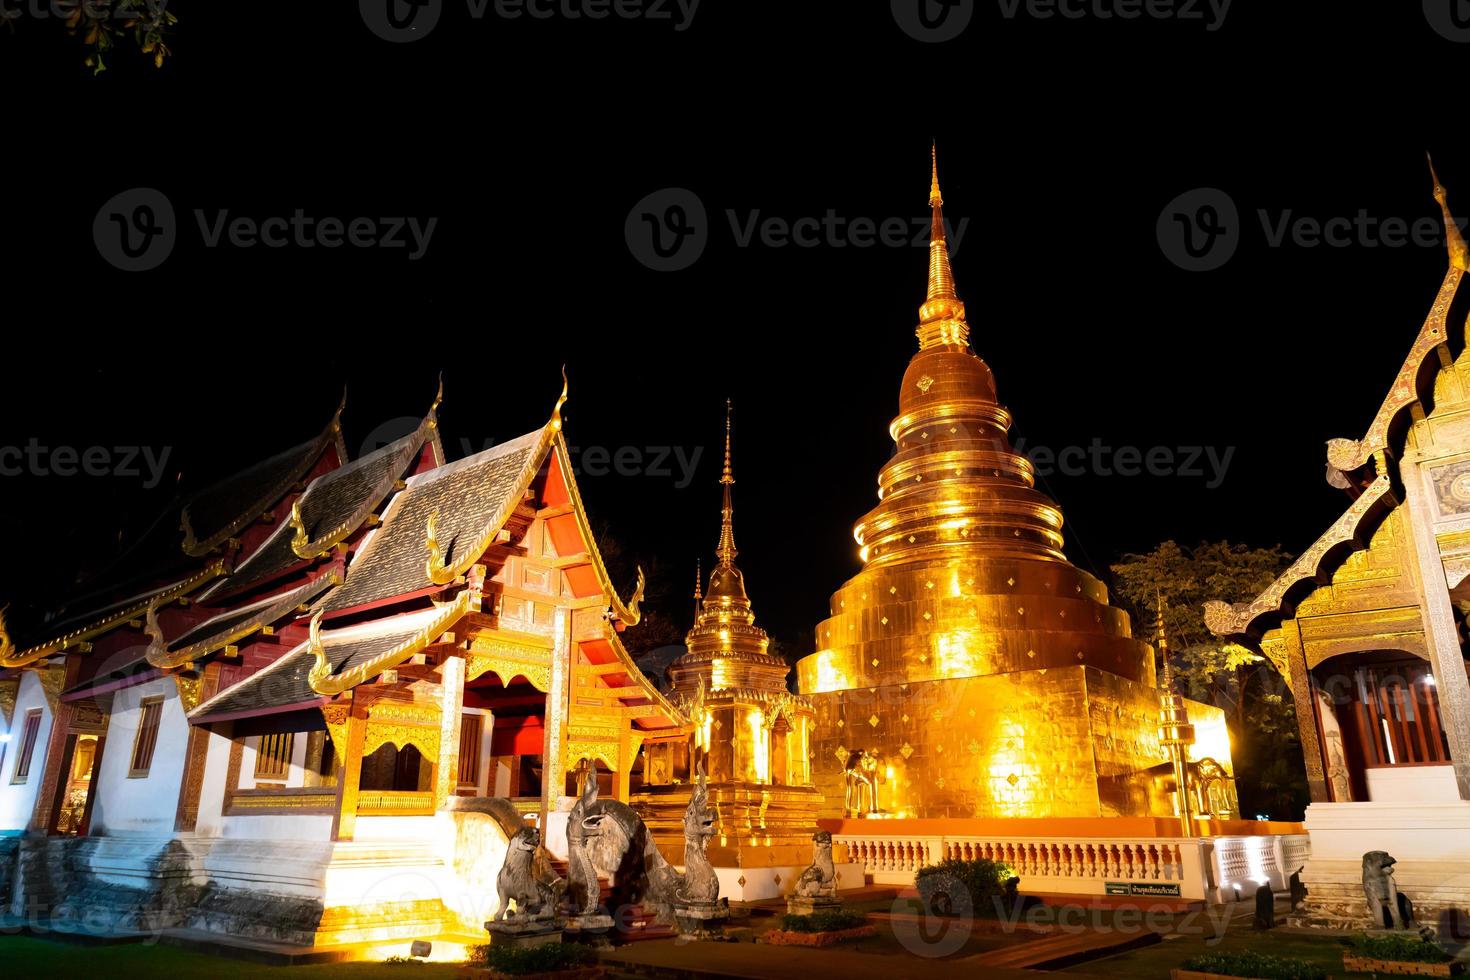 prachtige architectuur bij wat phra sing waramahavihan-tempel 's nachts in de provincie chiang mai, thailand foto